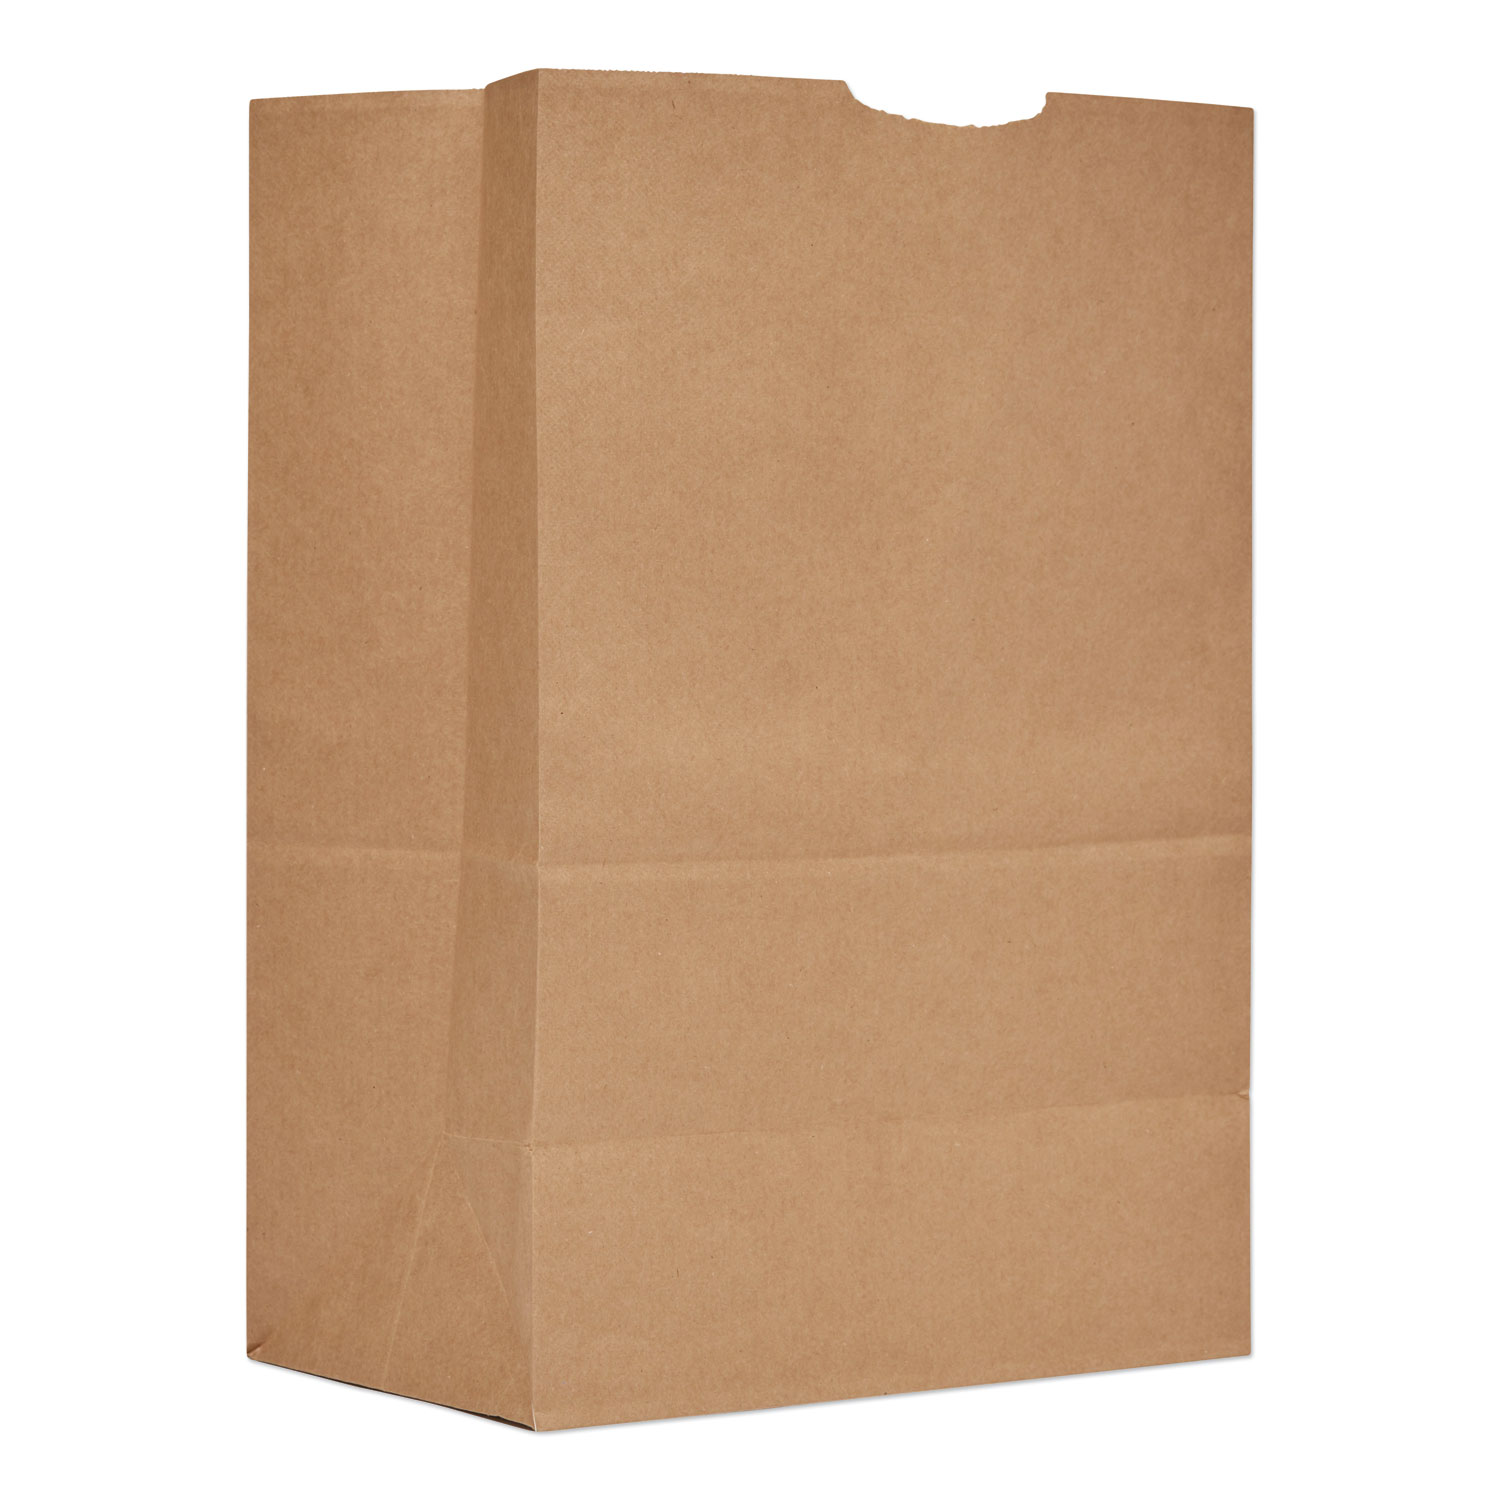  General SK1657 Grocery Paper Bags, 57 lbs Capacity, 1/6 BBL, 12w x 7d x 17h, Kraft, 500 Bags (BAGSK1657) 